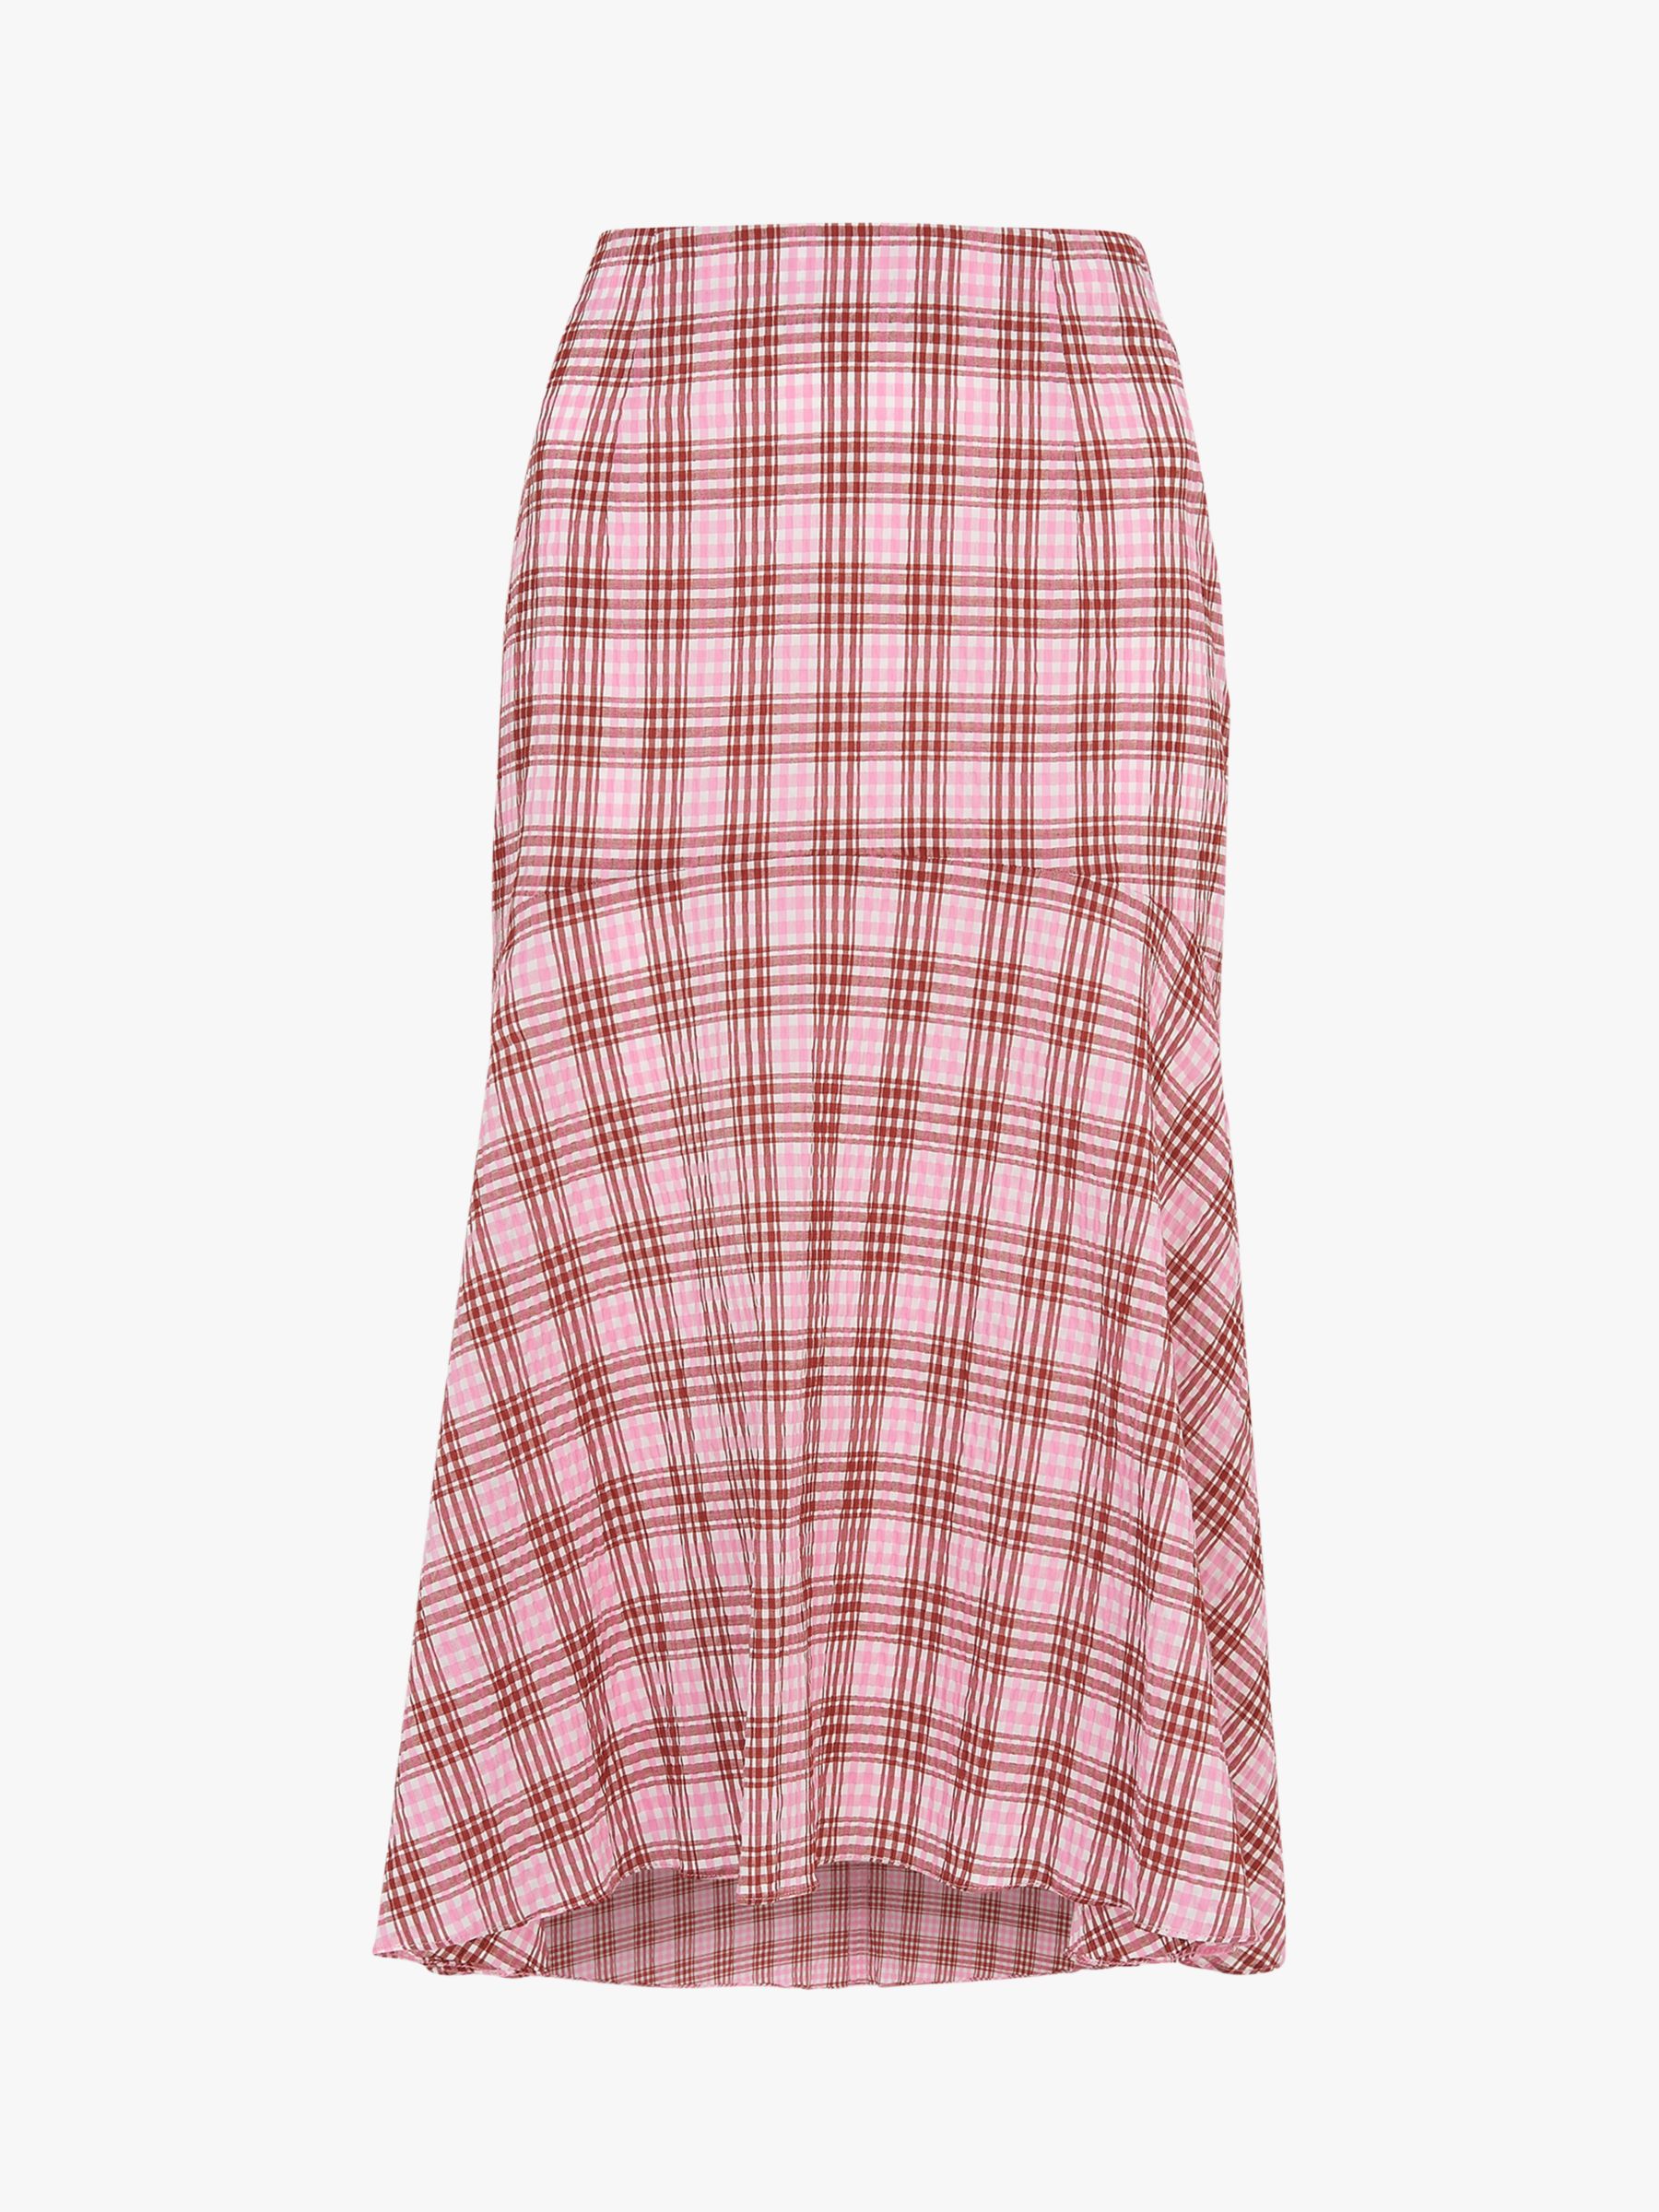 Whistles Check Seersucker Skirt, Pink/Multi